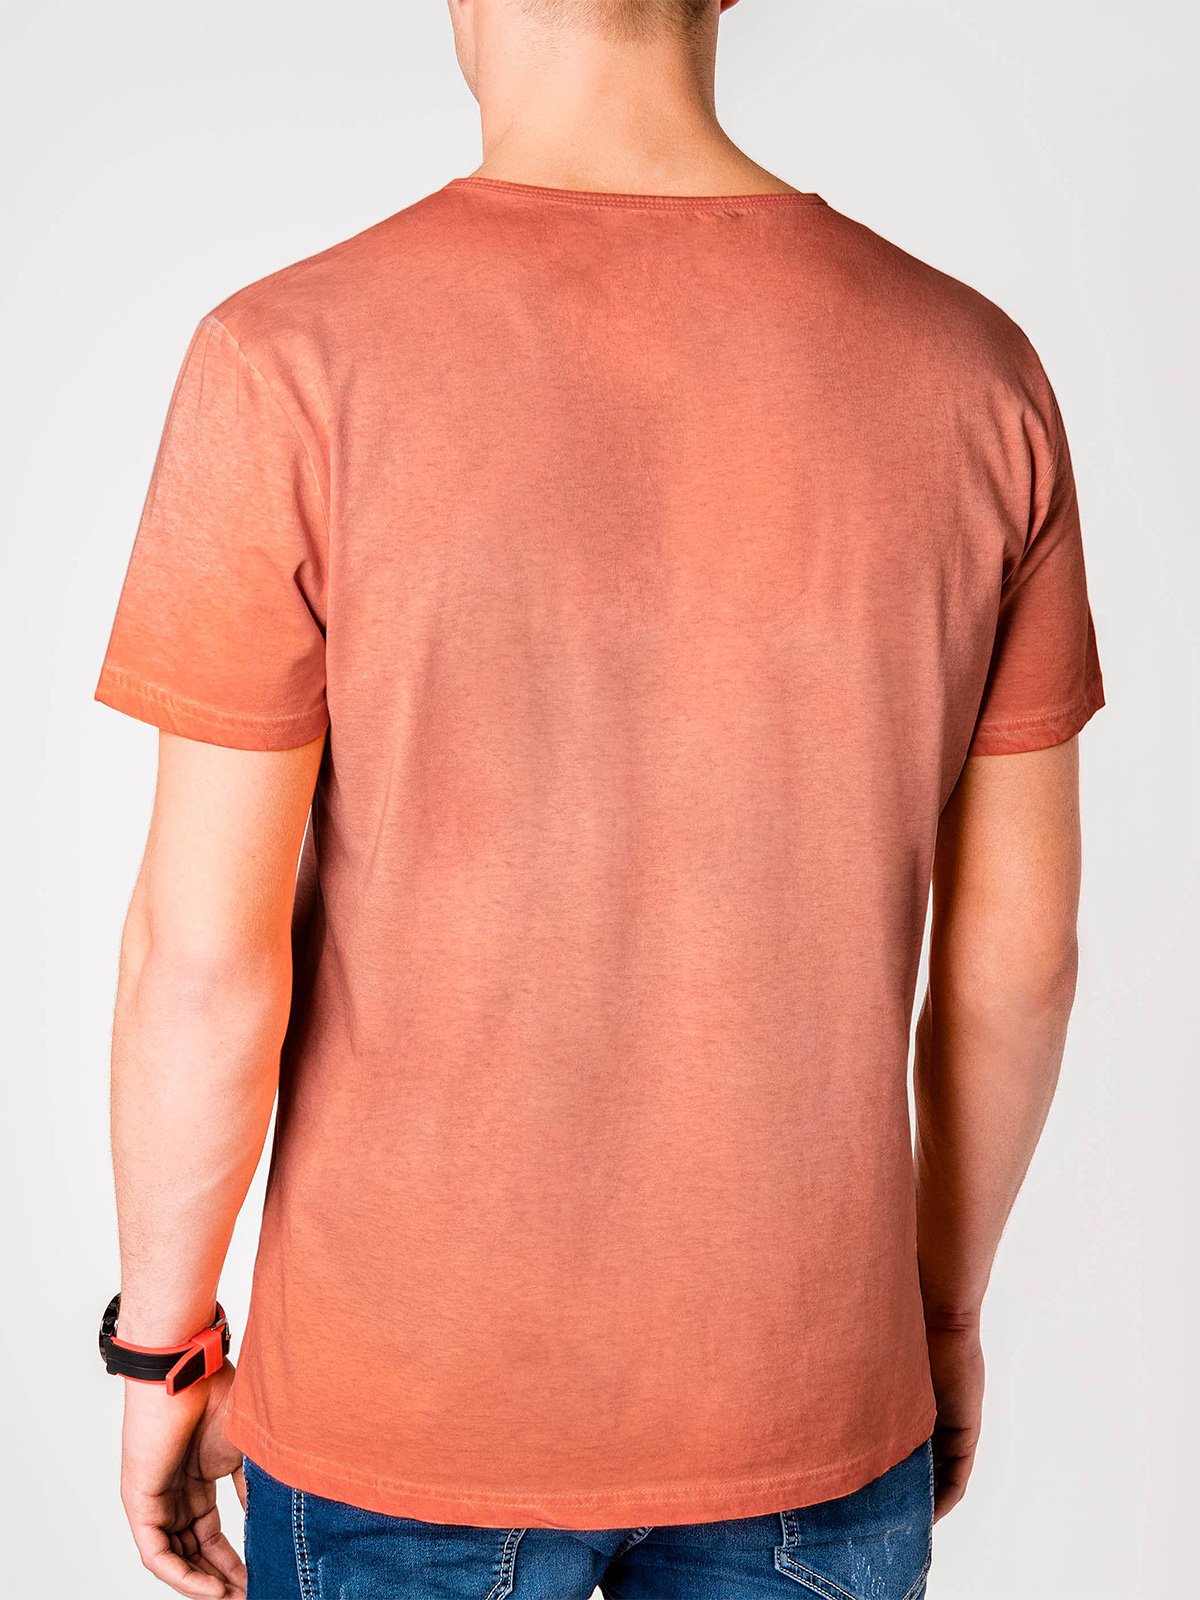 Men's plain t-shirt S894 - orange | MODONE wholesale - Clothing For Men